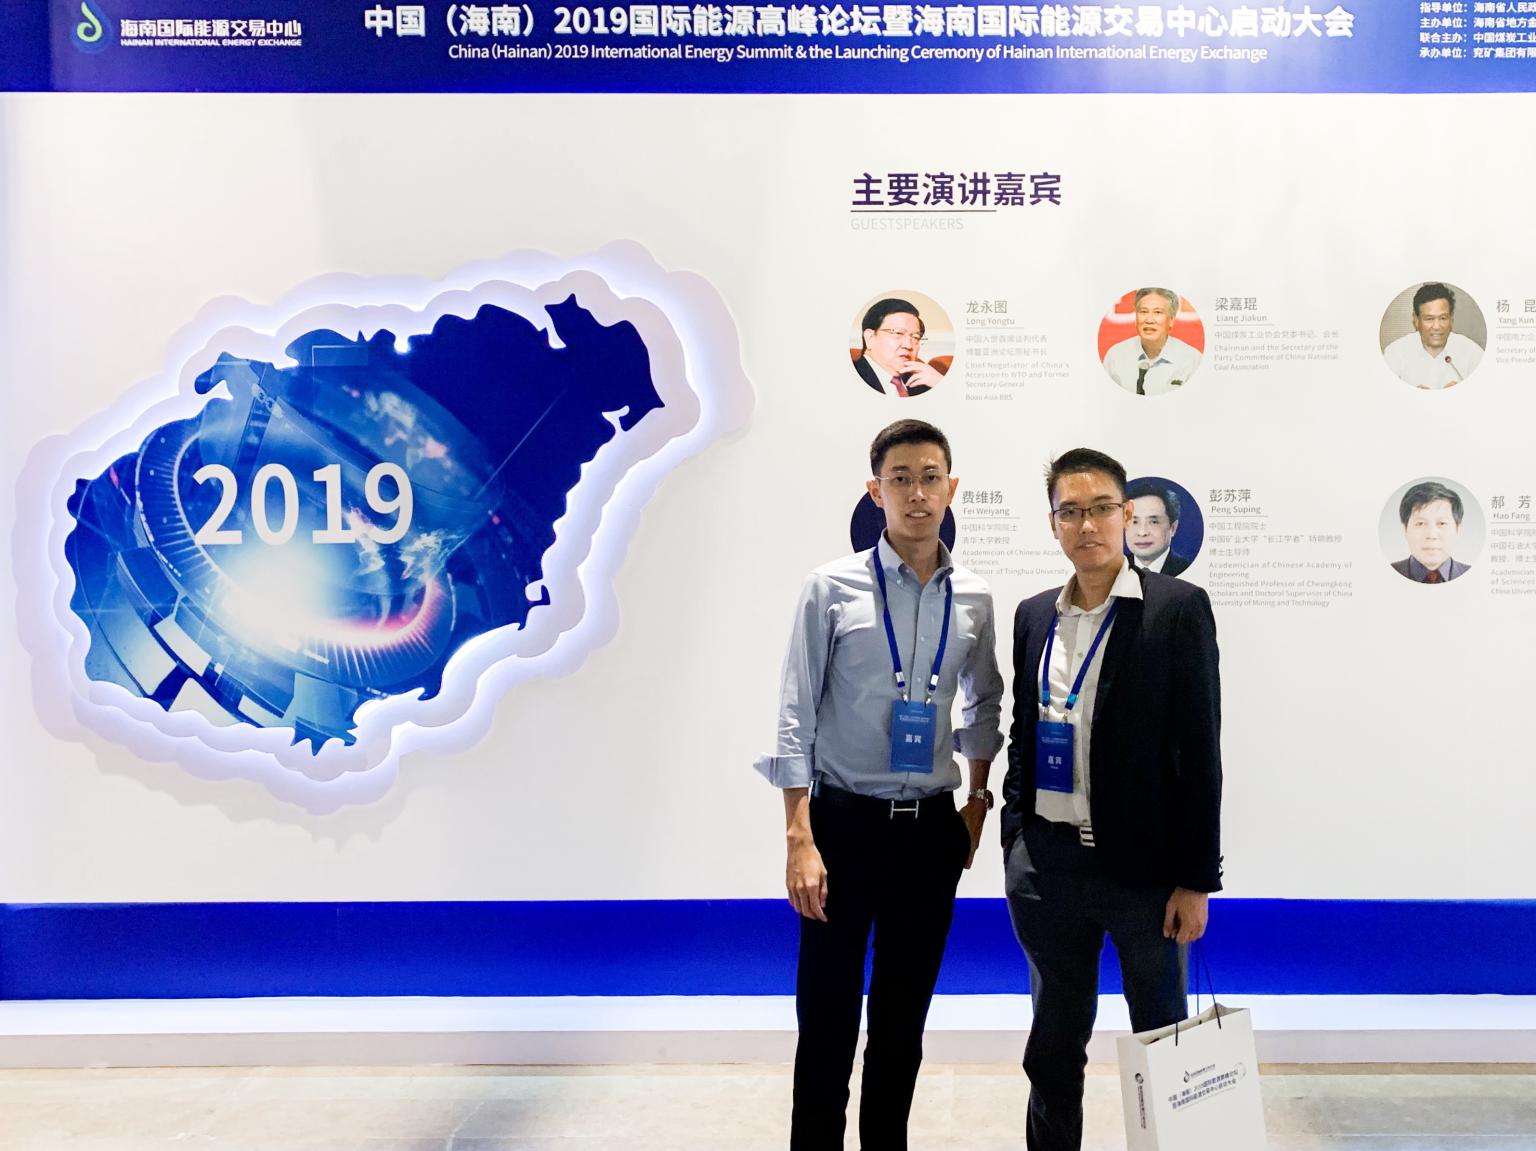 2019 International Energy Summit & the Launching Ceremony of Hainan International Energy Exchange